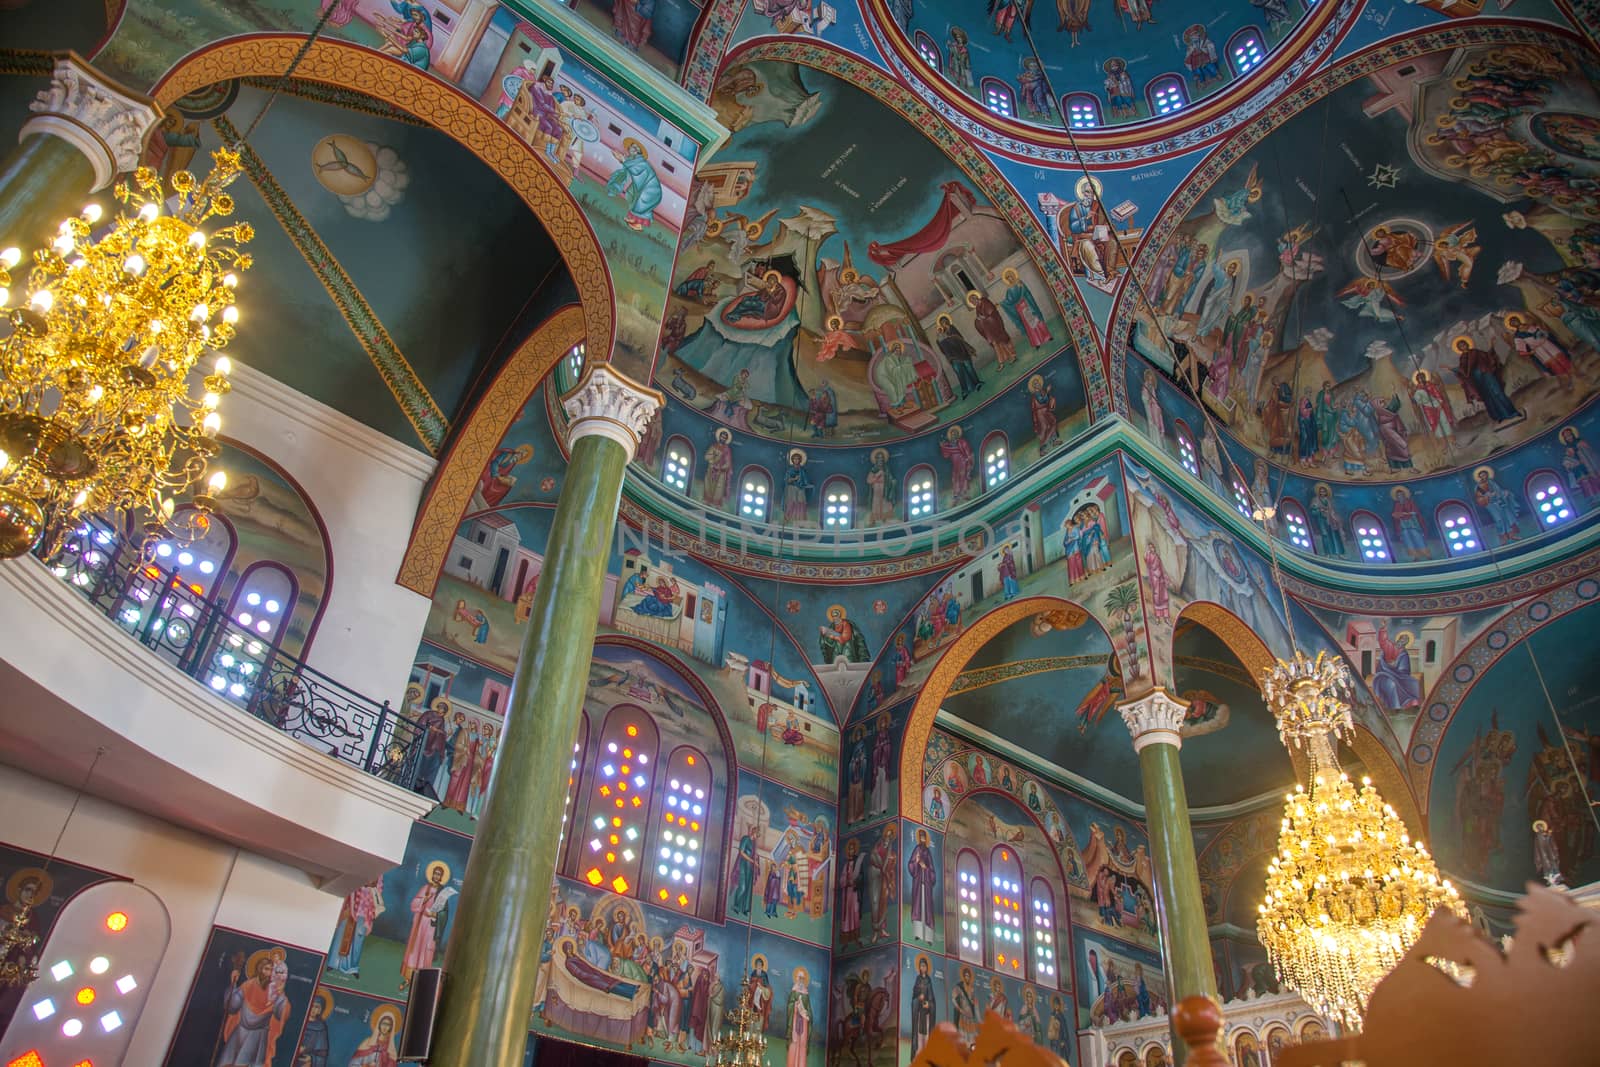 Christian Orthodox church interior by Portokalis